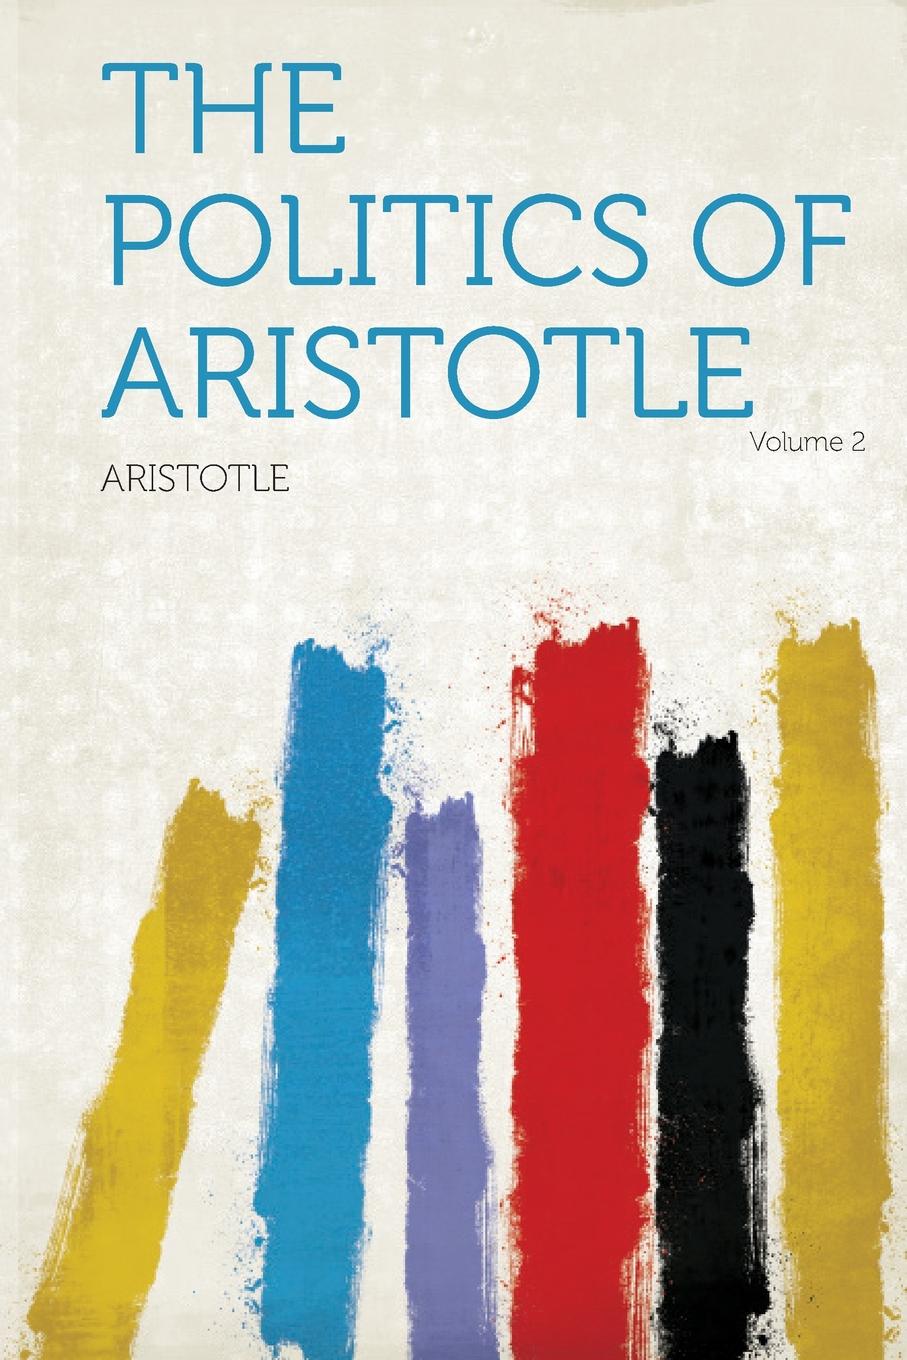 The Politics of Aristotle Volume 2